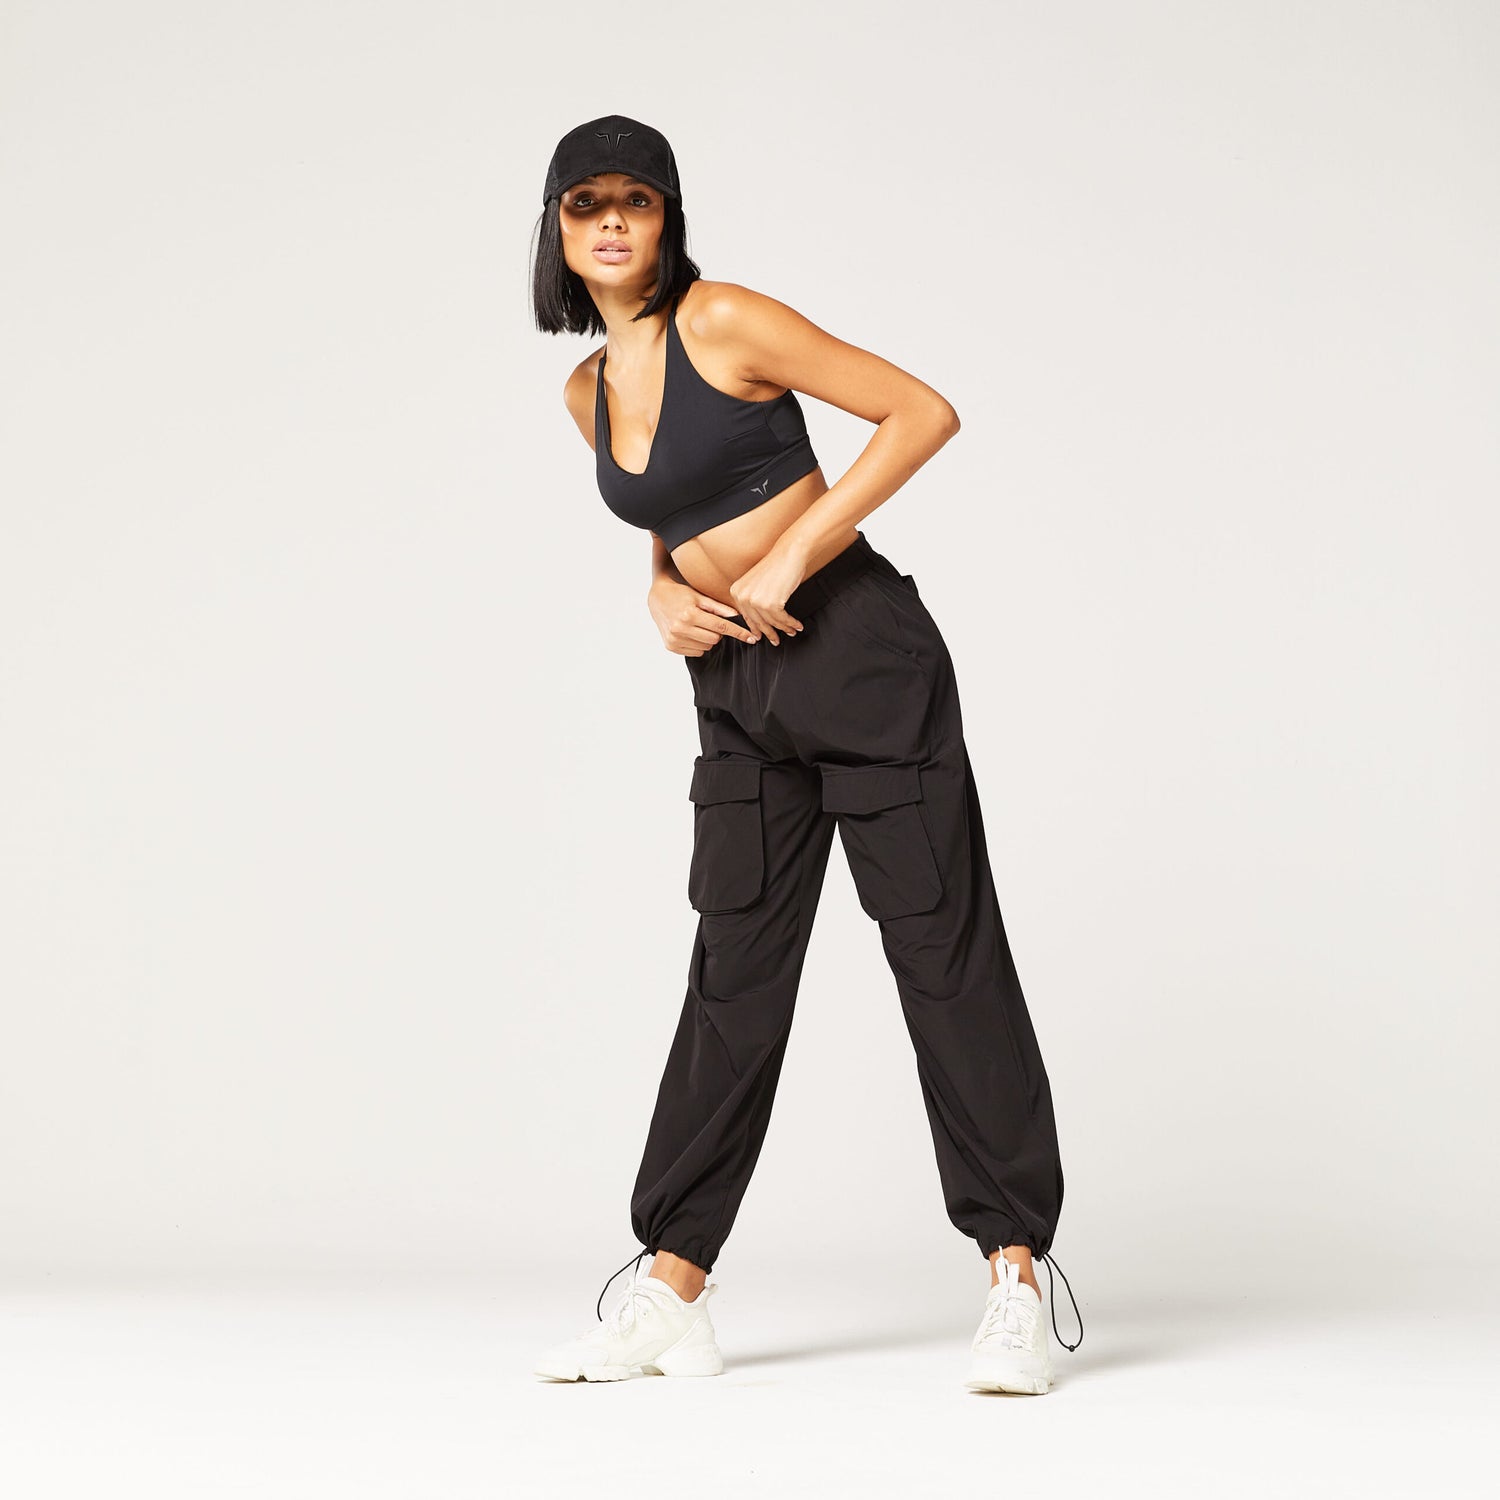 squatwolf-workout-clothes-code-cargo-pants-black-gym-pants-for-women